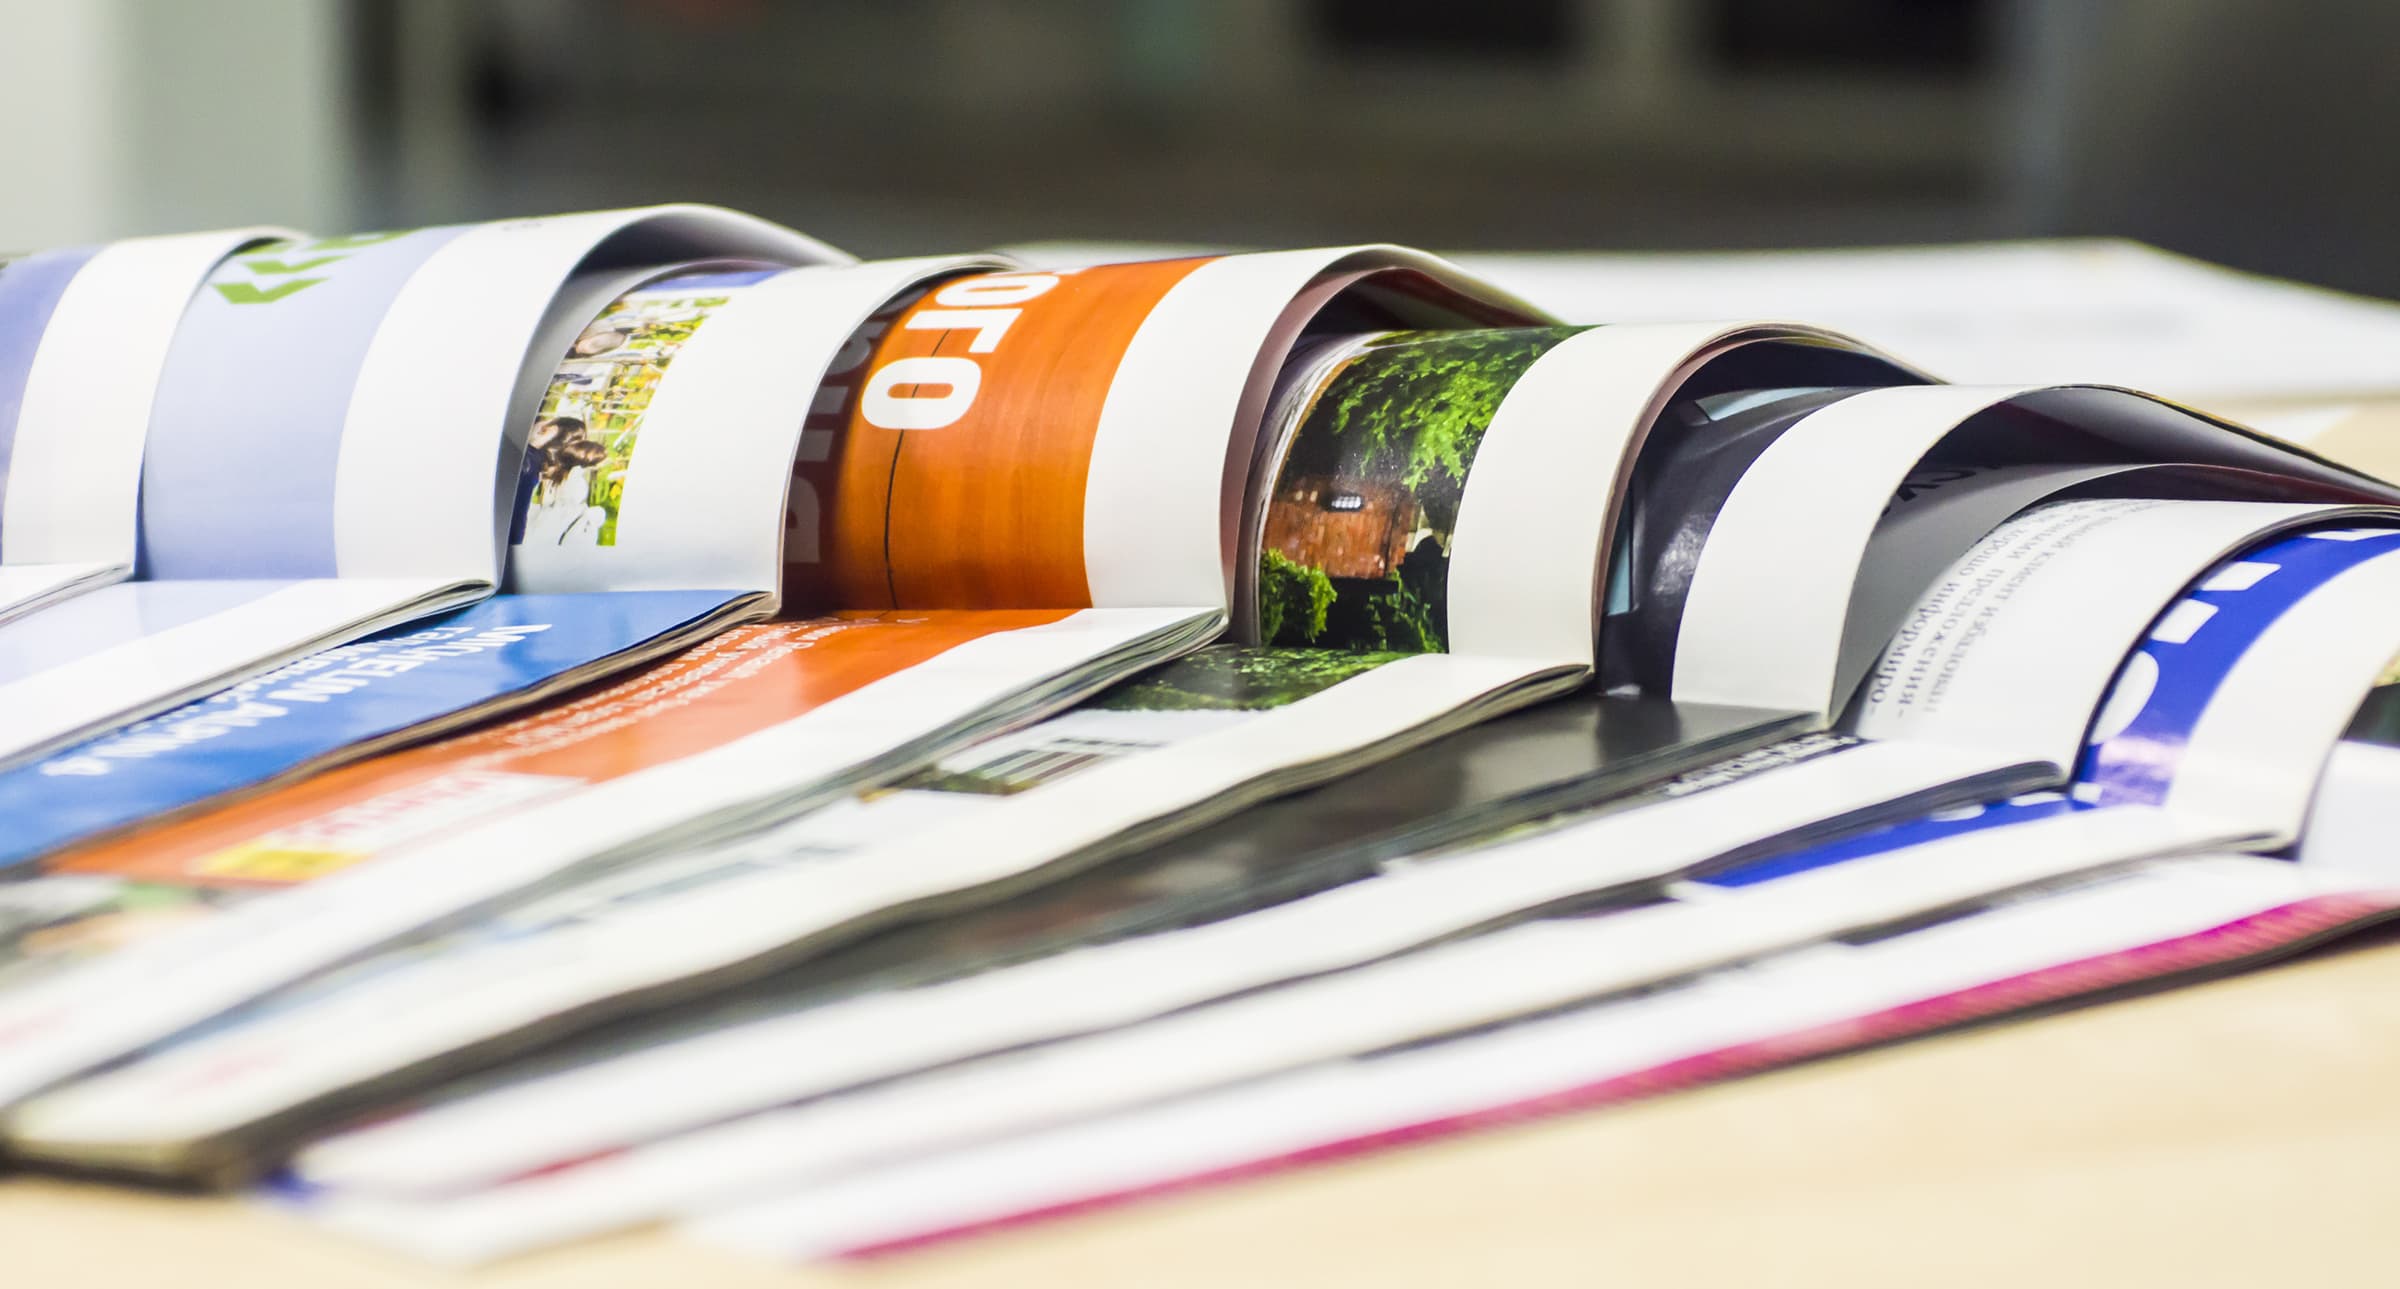 print magazine readership